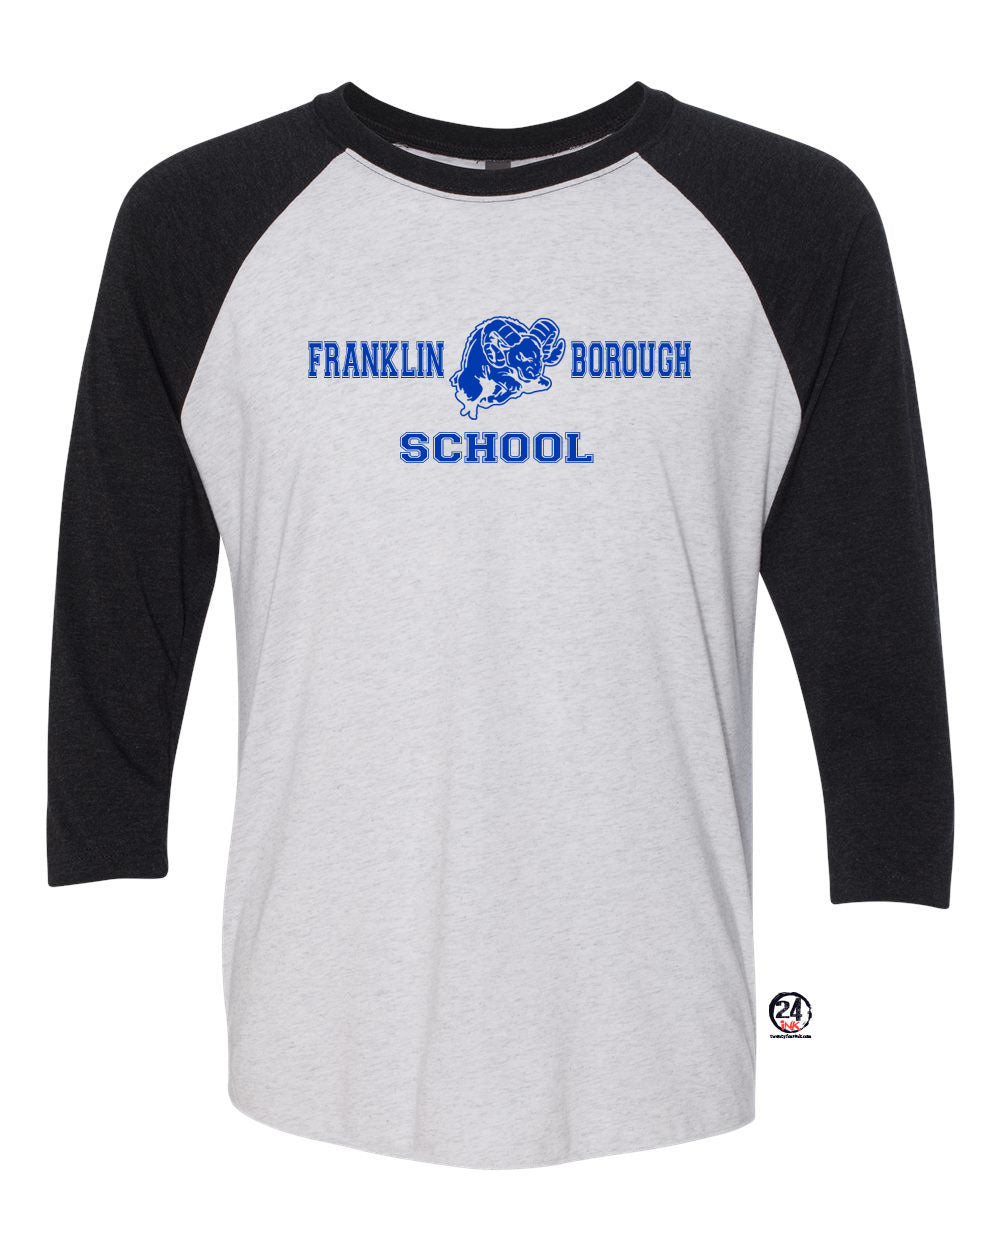 Franklin School Design 3 raglan shirt